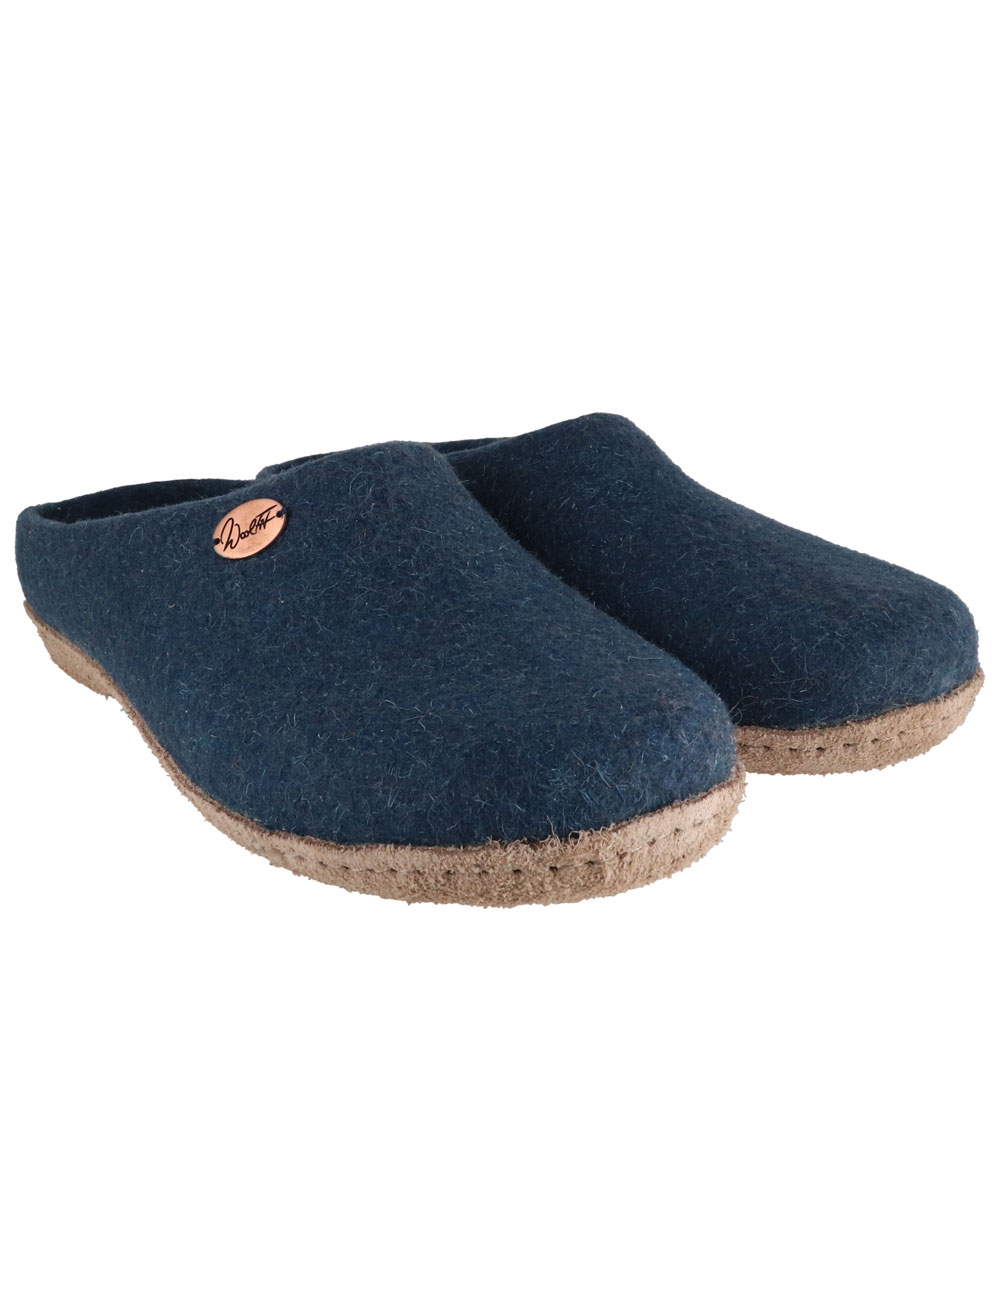 WoolFit® hand-felted slippers 'Classic', blue | Sz. 35-50 EU